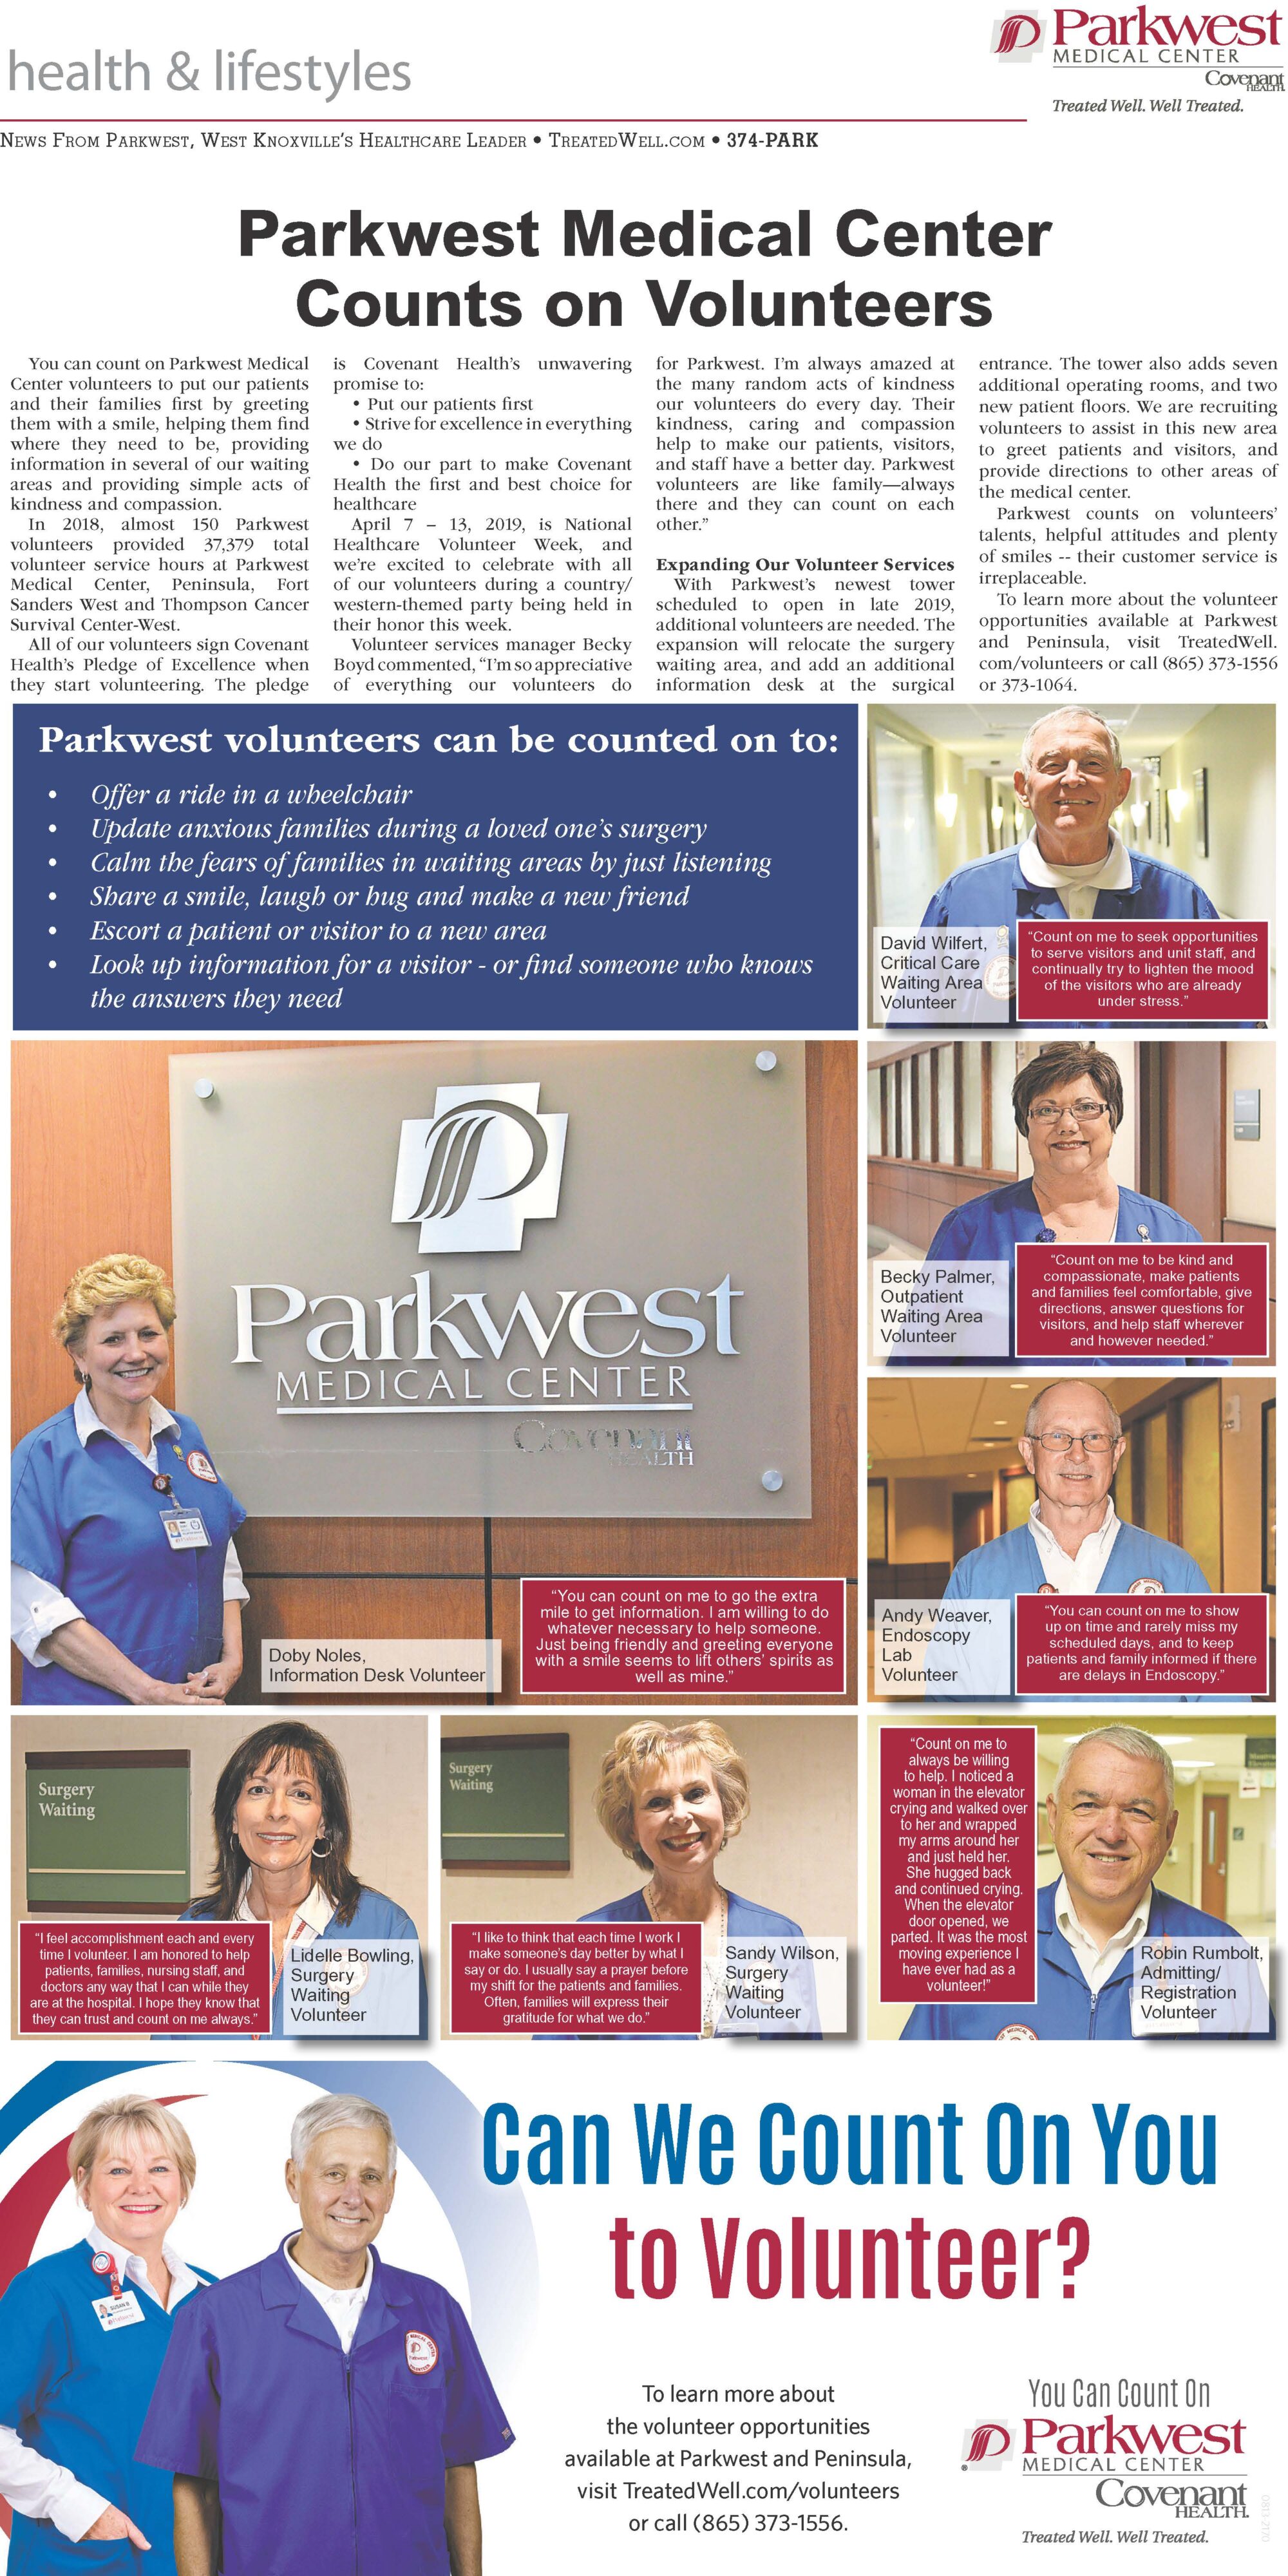 Health & Lifestyles newspaper insert featuring Parkwest Medical Center volunteers.